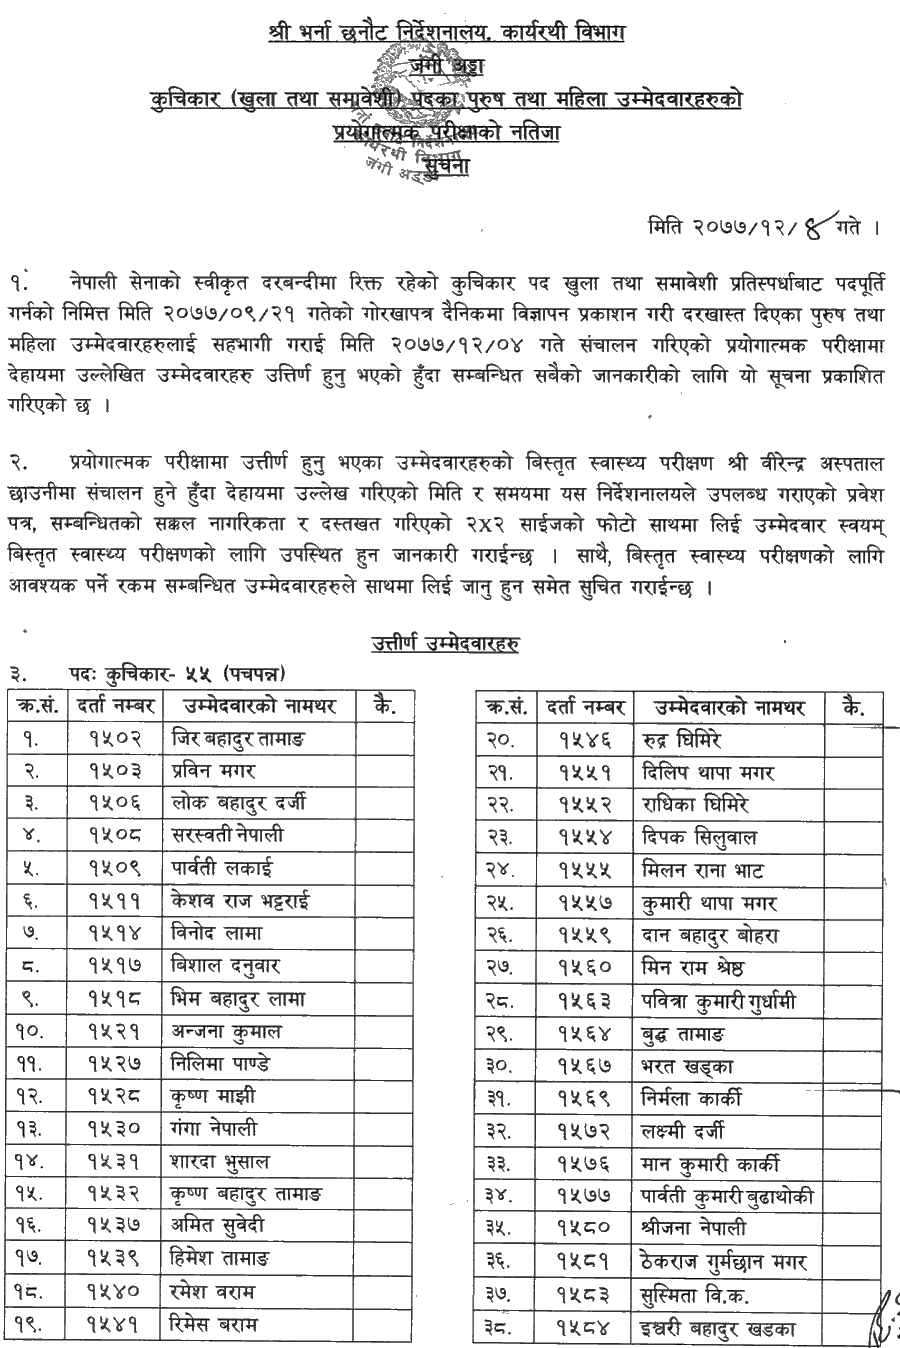 Nepal Army Practical Exam Result of Kuchikar